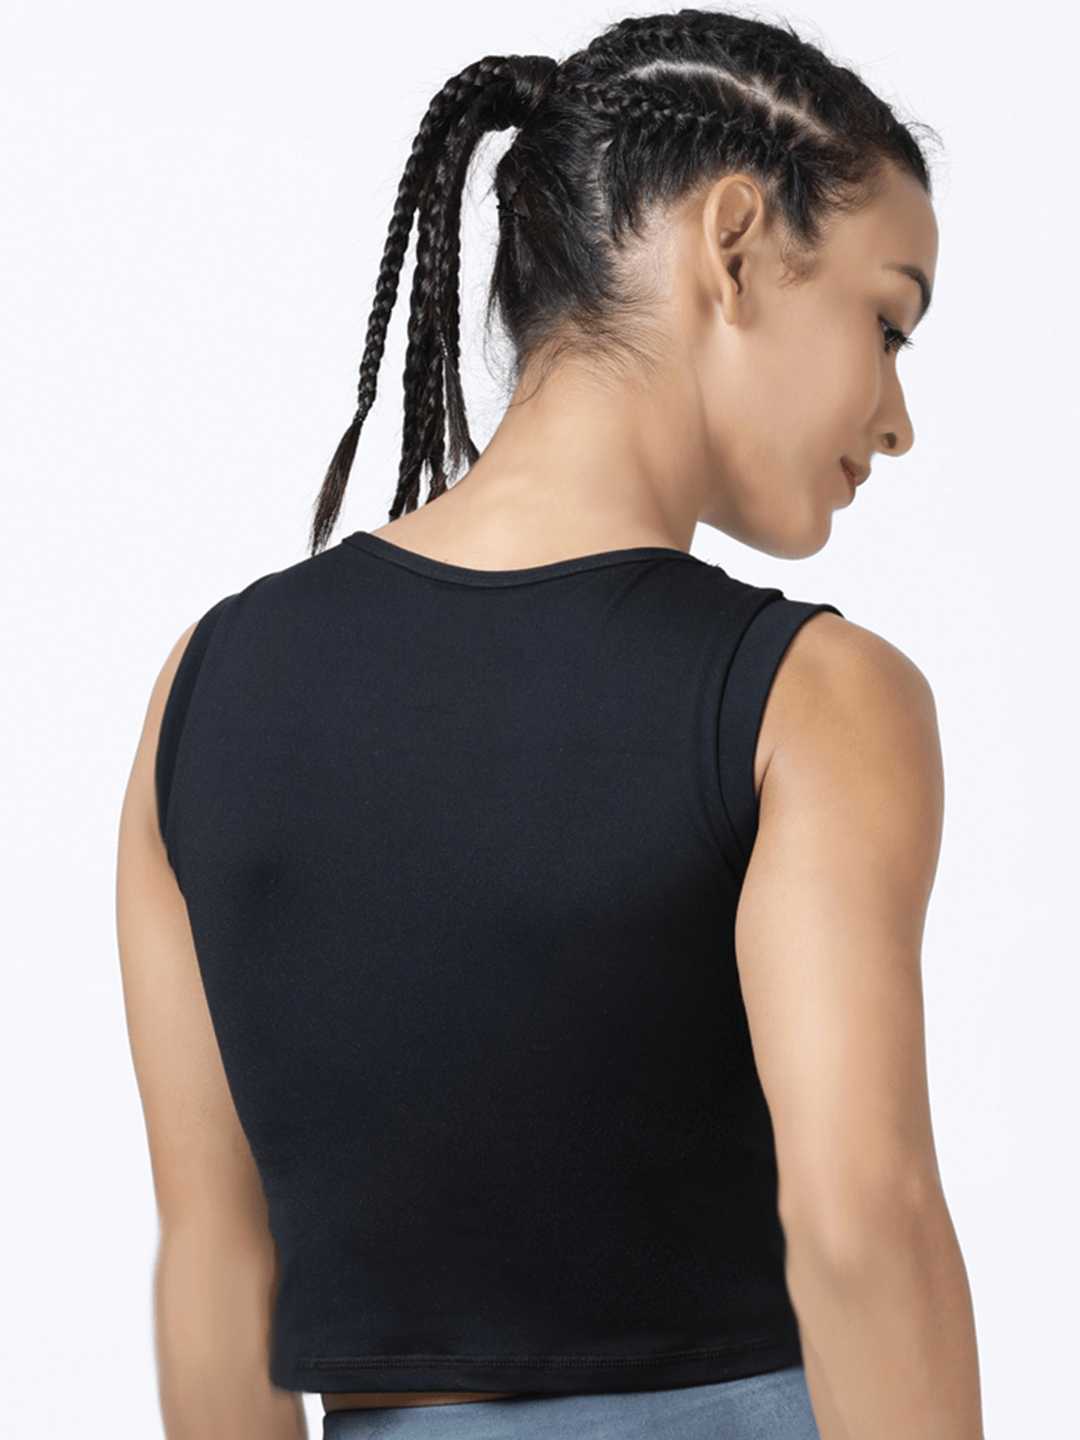 High Impact Full Coverage Nylon Sports Bra For Women – Black – MICHELLE  SALINS